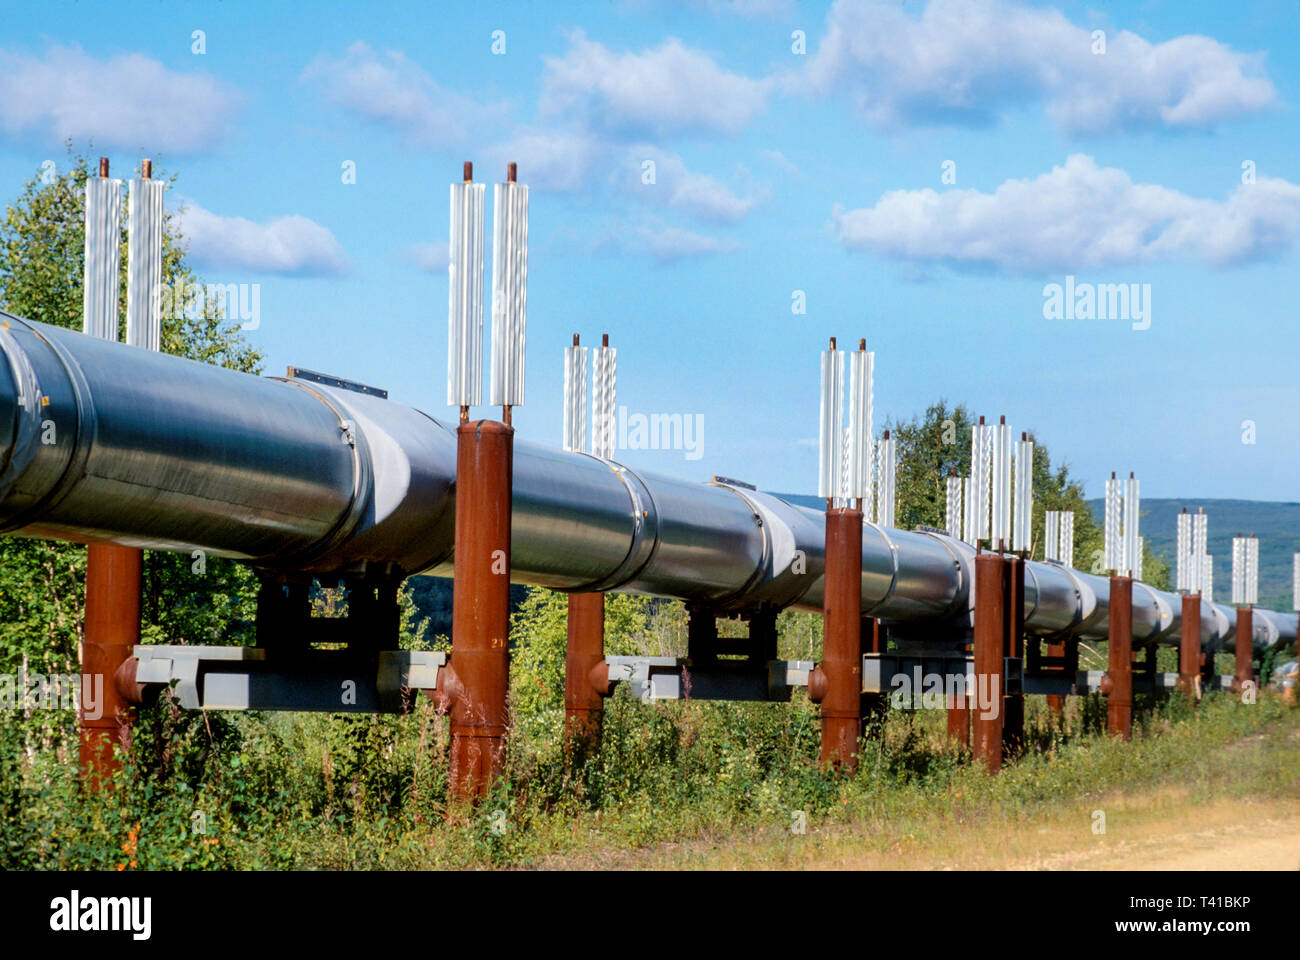 Alaska Alaskan Fairbanks Trans Alaskan Pipeline,above ground oil, Stock Photo